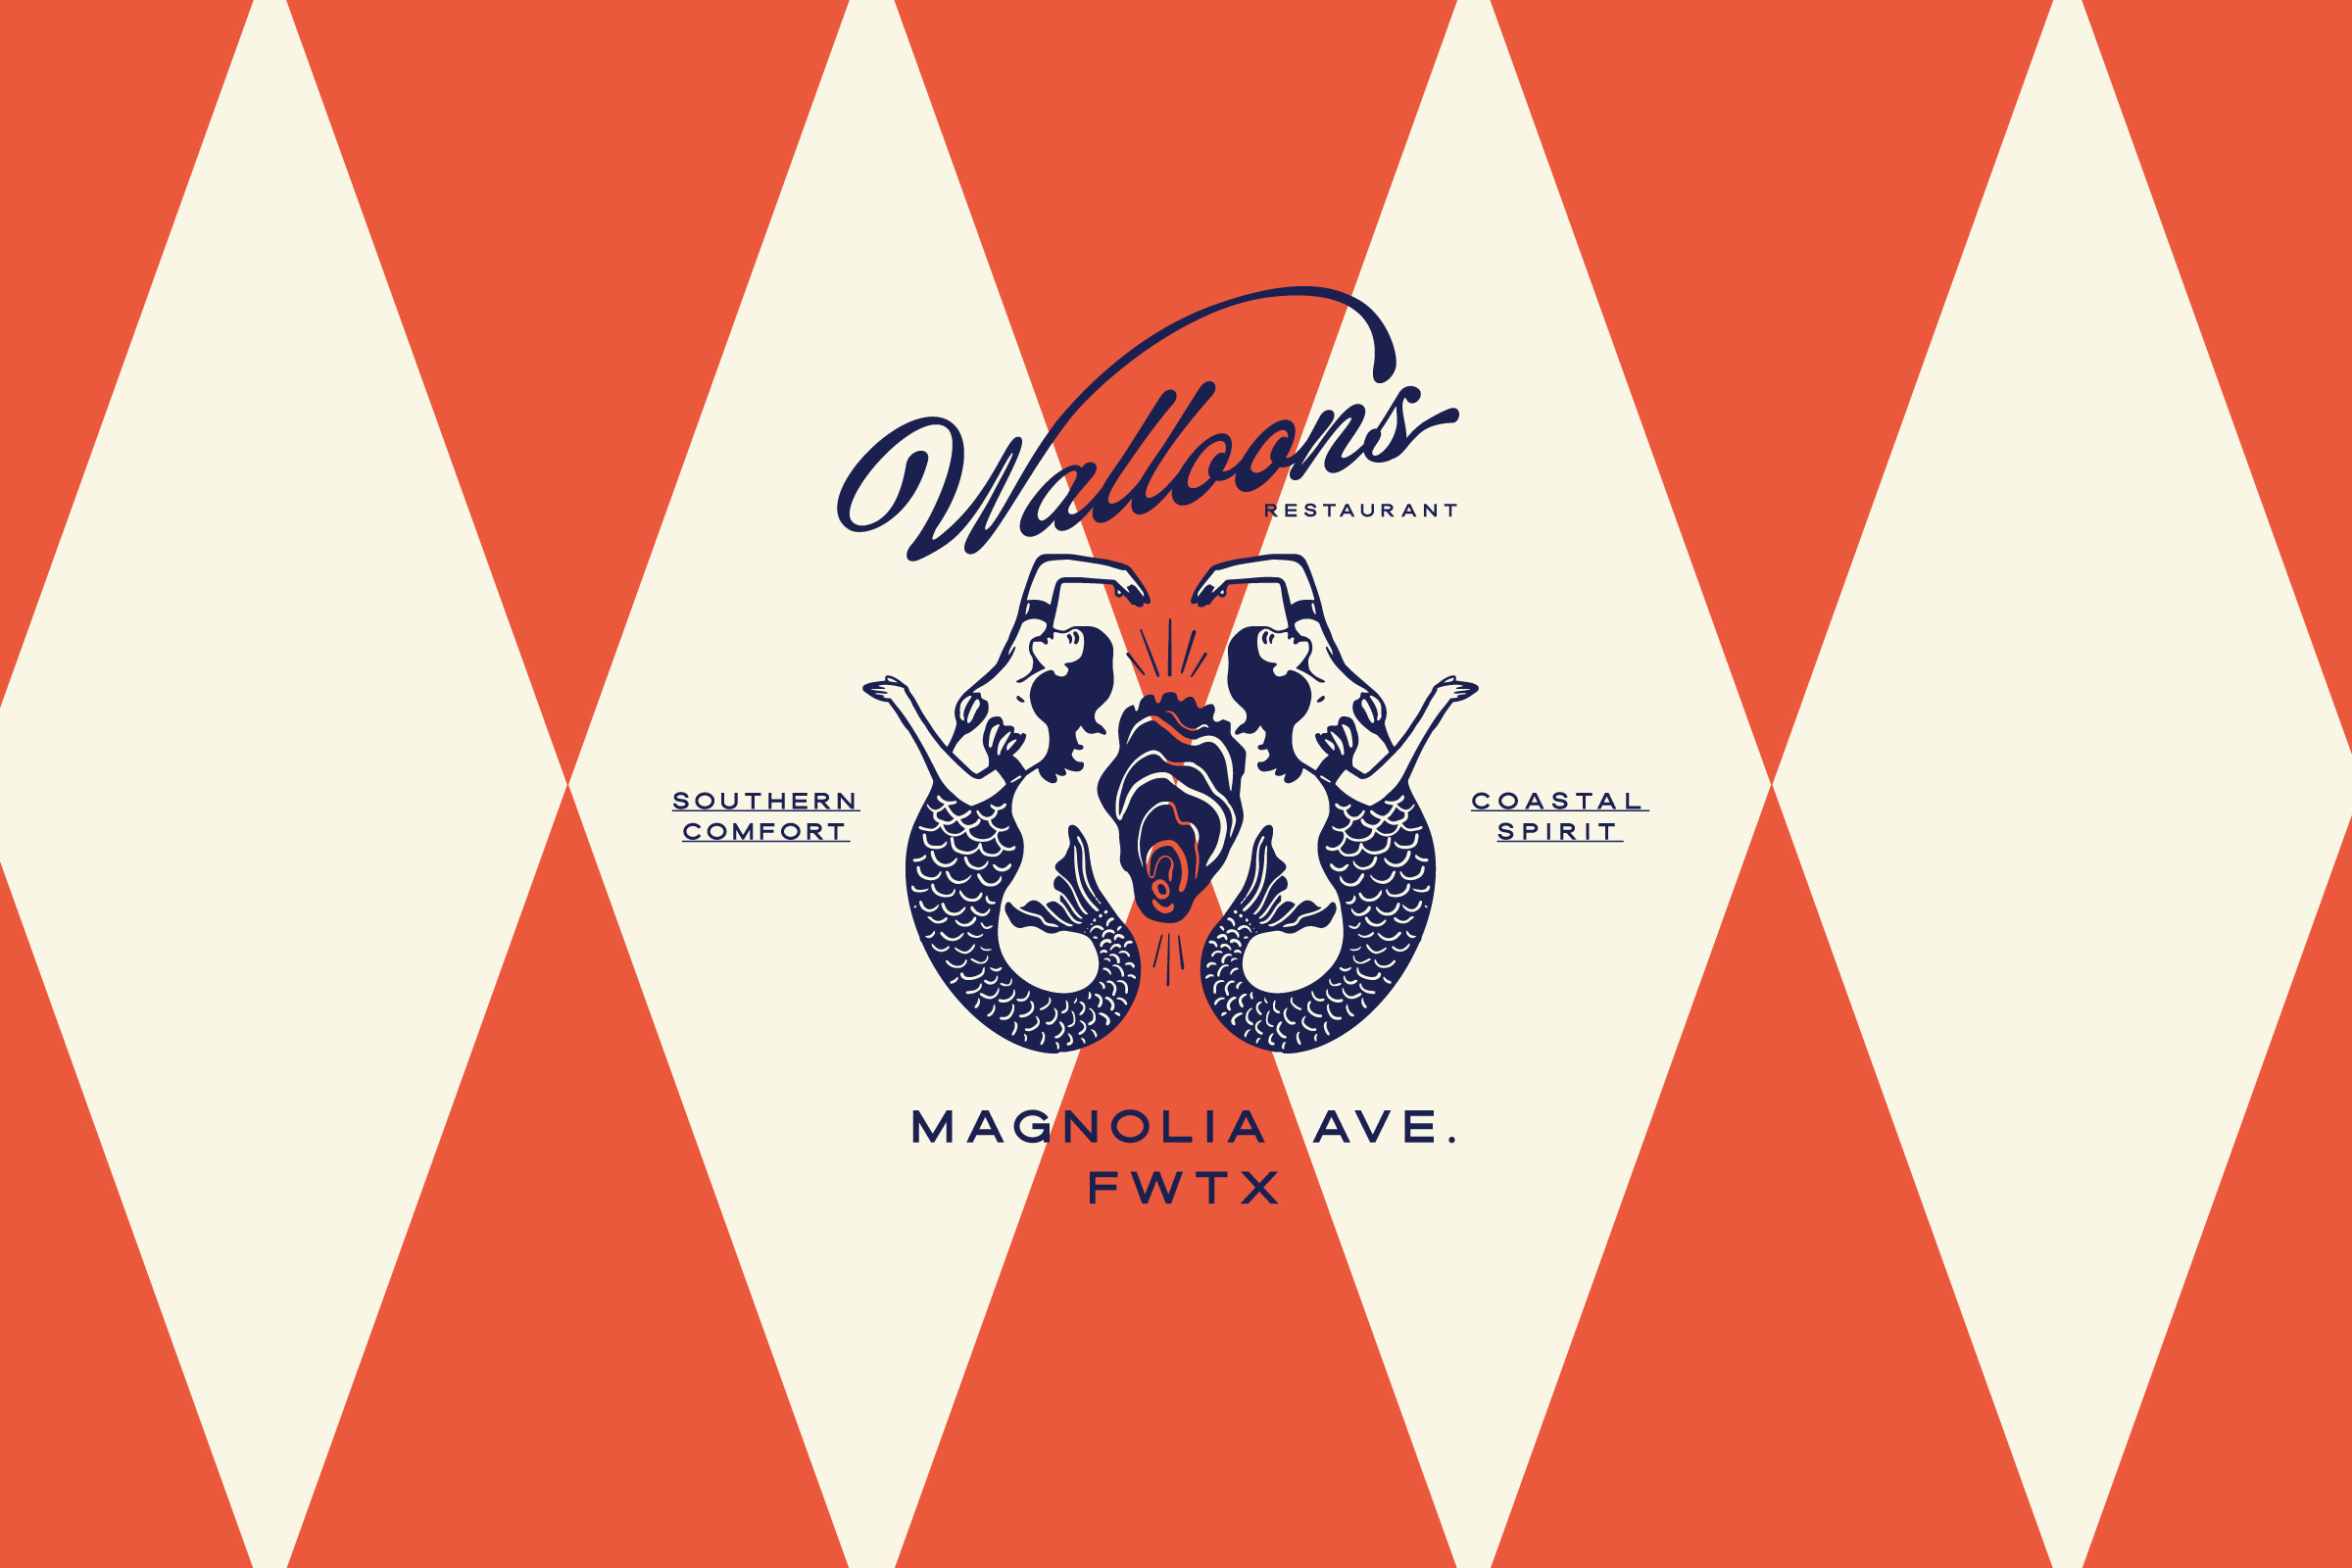 walloon's restaurant fort worth texas magnolia avenue mermaids branding design identity restaurant brands international